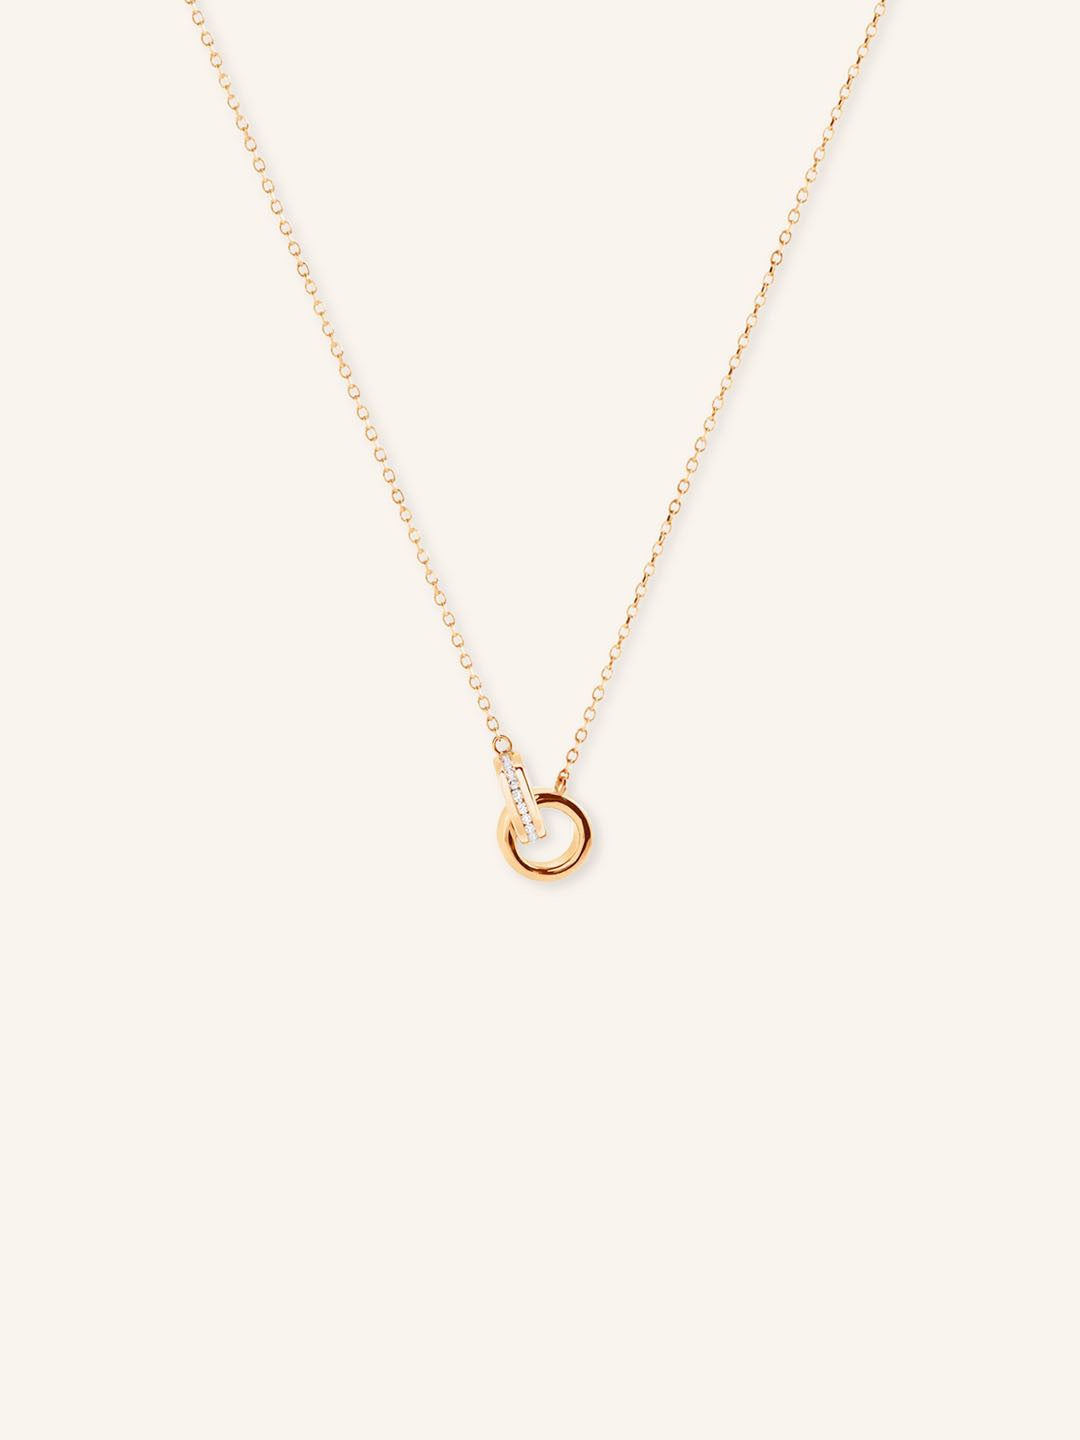 Diamond Interlocking Circle Necklace